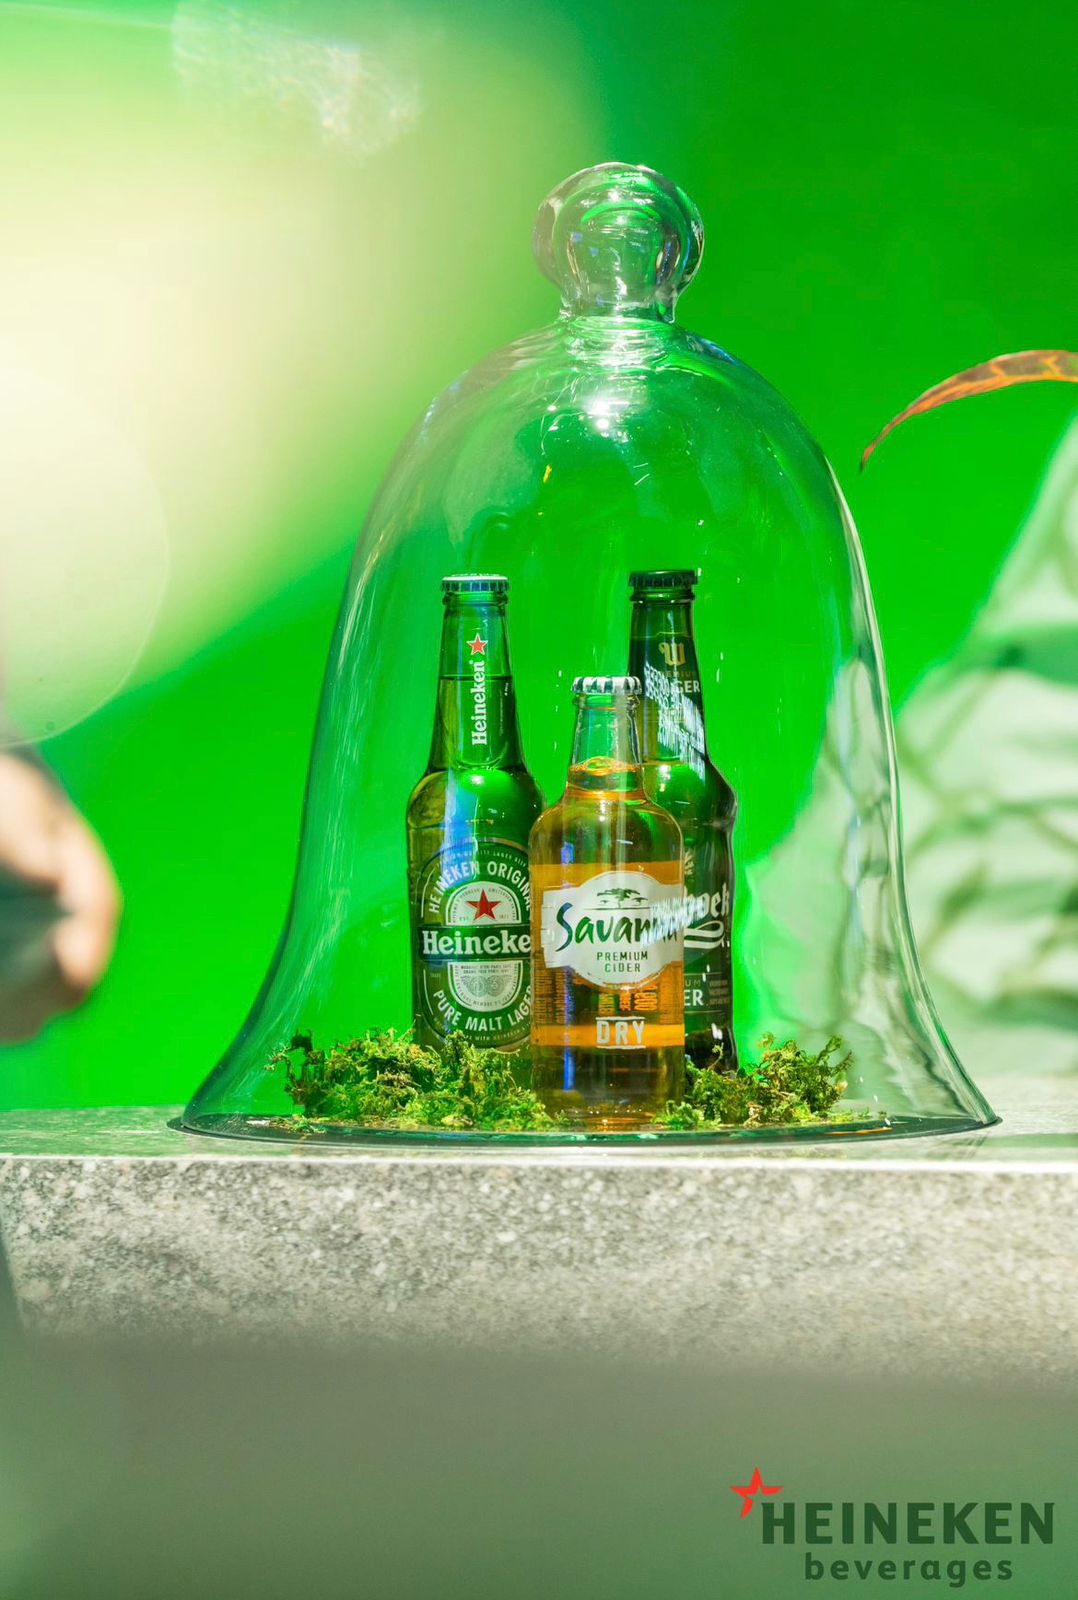 History, Origins and Drinks Portfolio of Heineken